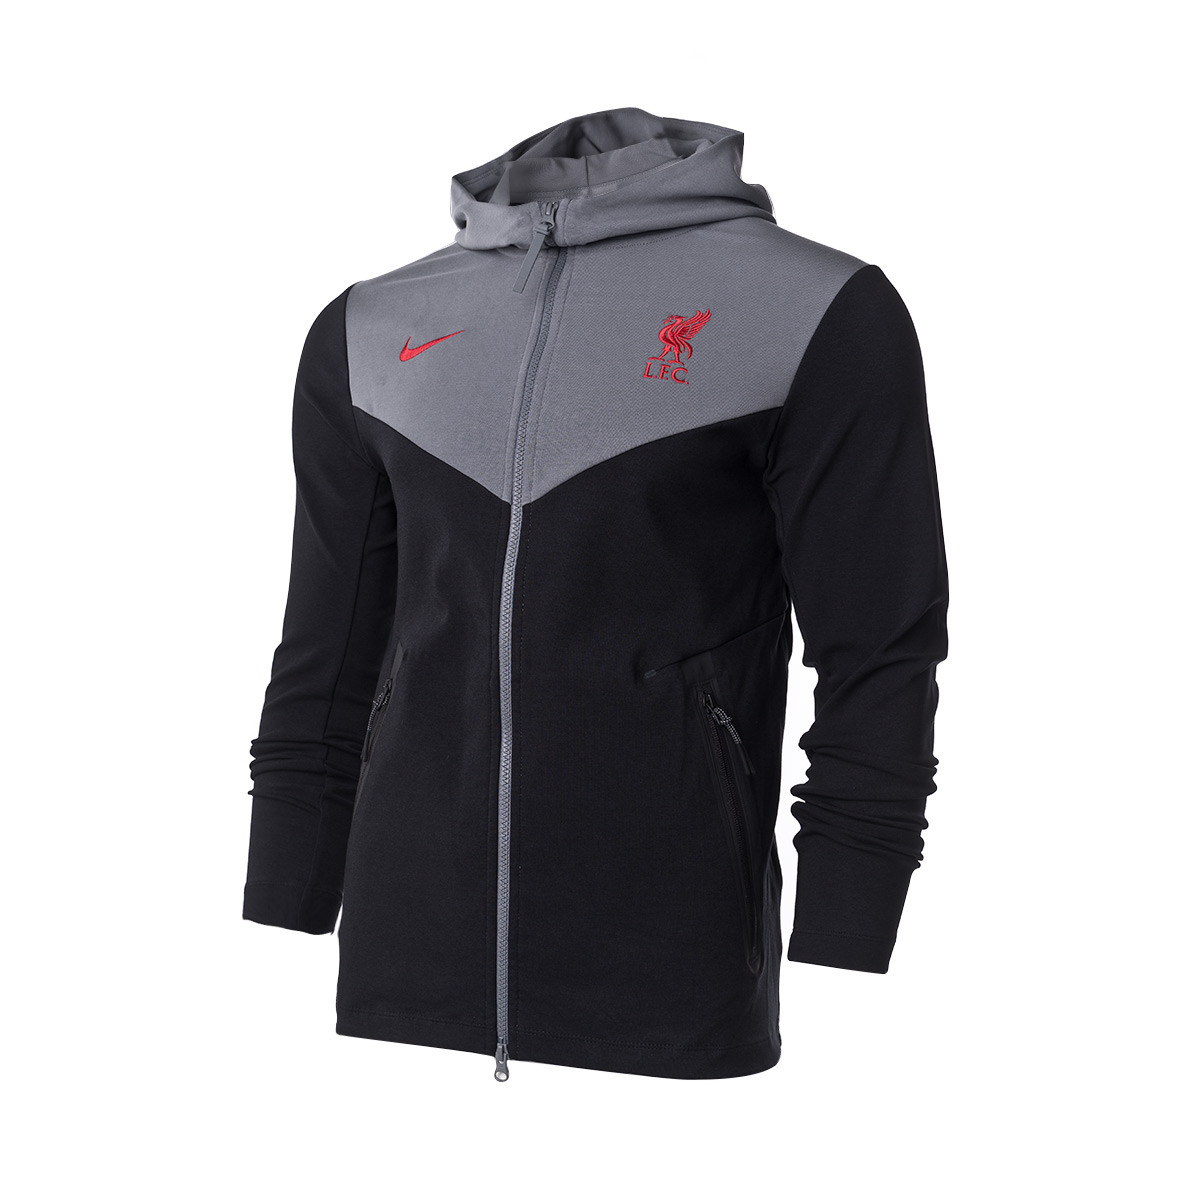 Jacket Nike Liverpool Fc Nsw Tech Pack Hoodie Fz Mc 2020 2021 Black Smoke Grey Gym Red Futbol Emotion